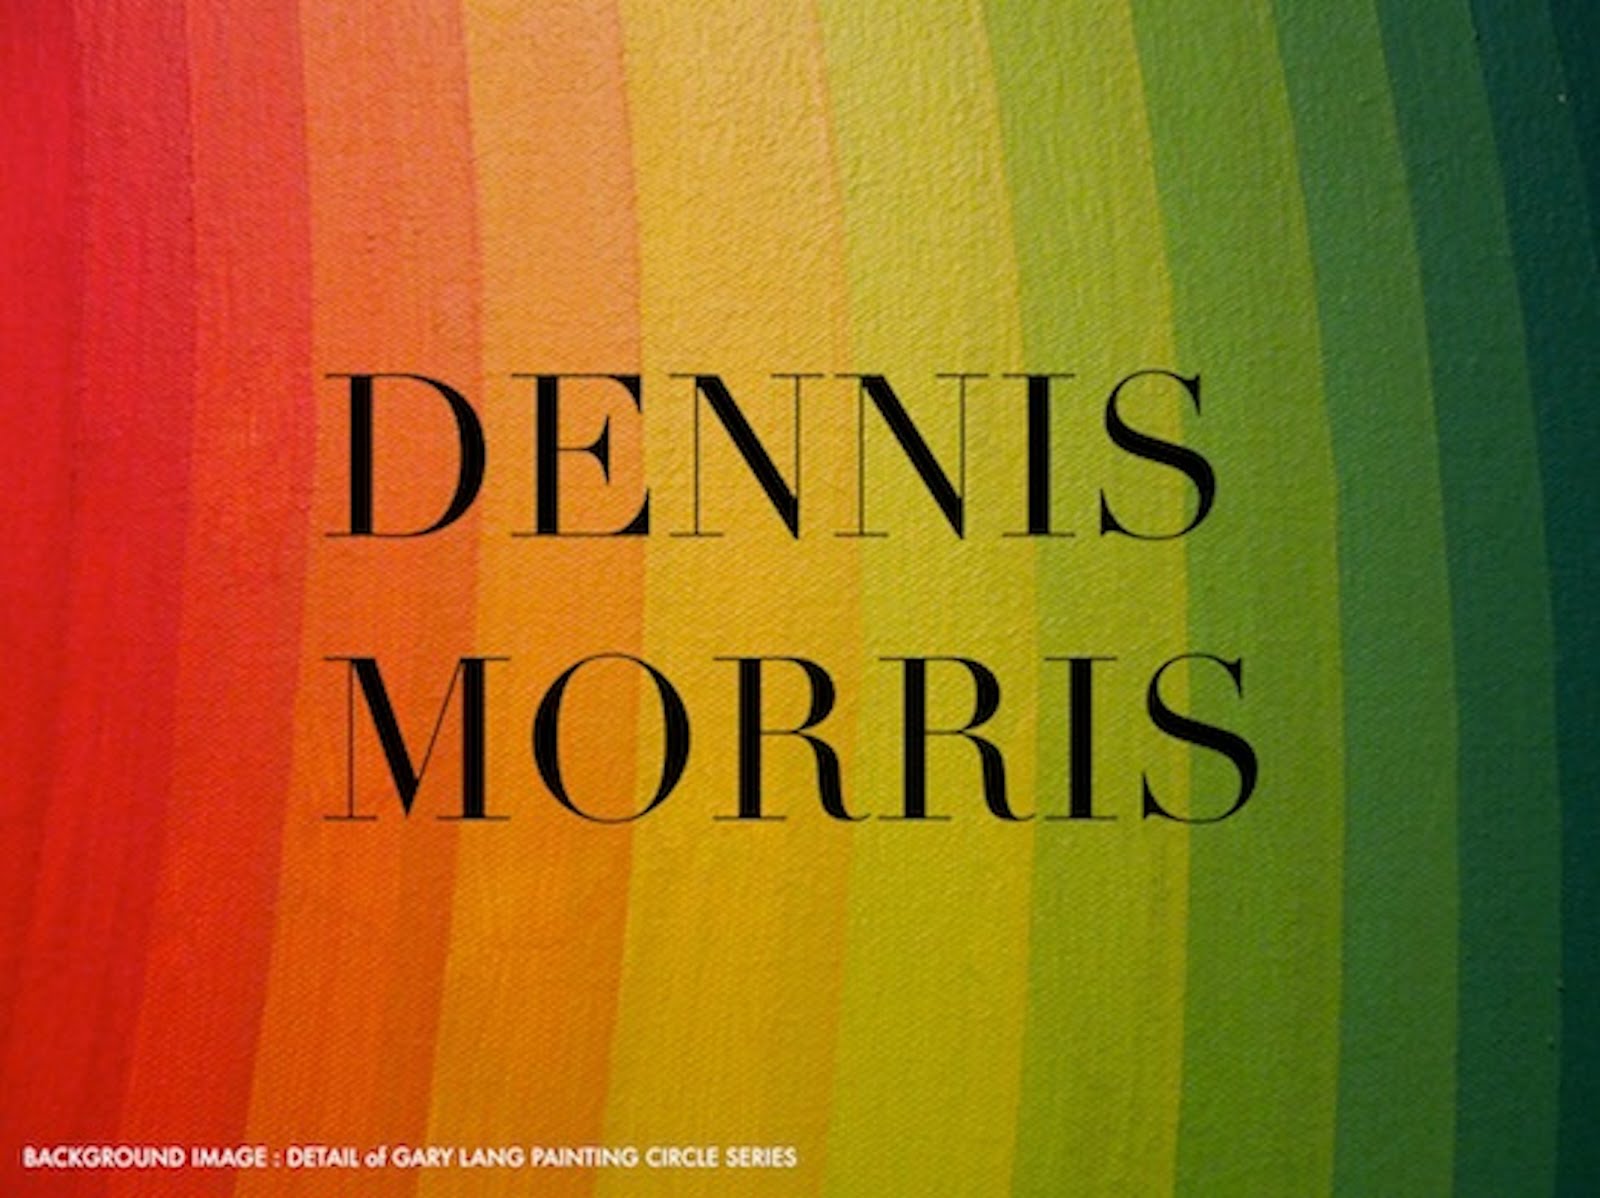 DENNIS MORRIS INTERVIEW